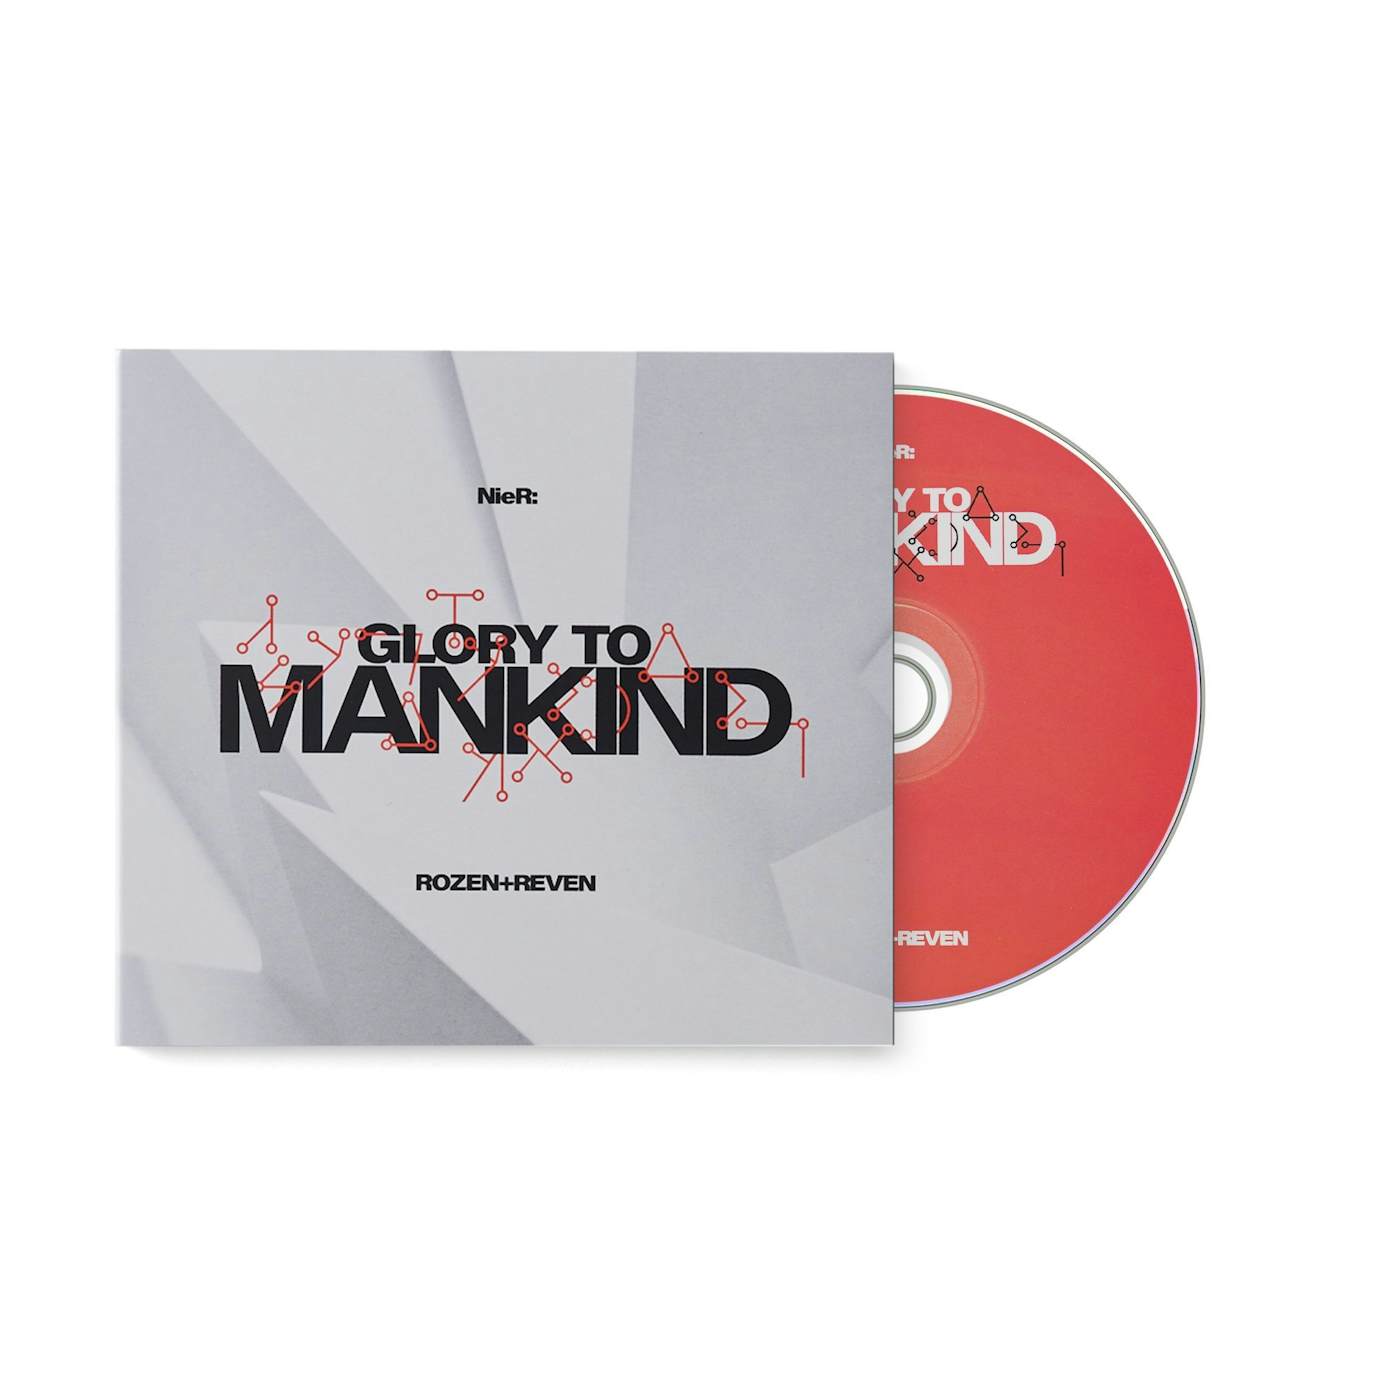 NieR: Glory to Mankind - ROZEN + REVEN (Compact Disc)